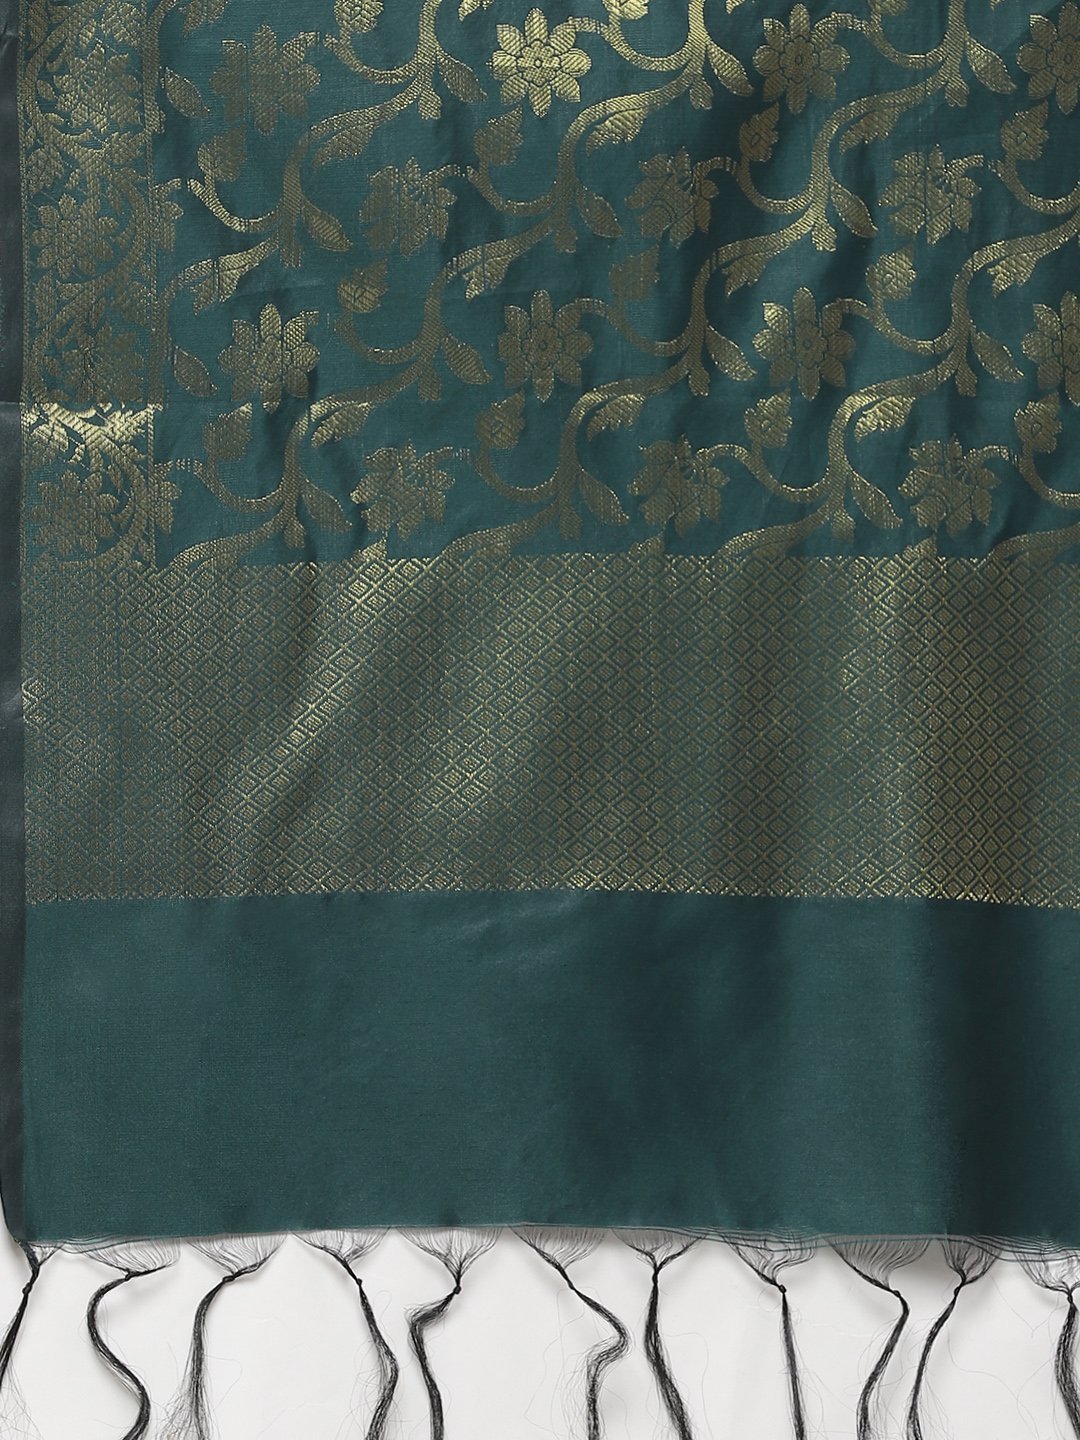 Women's Green & Golden Solid Kurti with Sharara & Woven Design Dupatta - Jompers